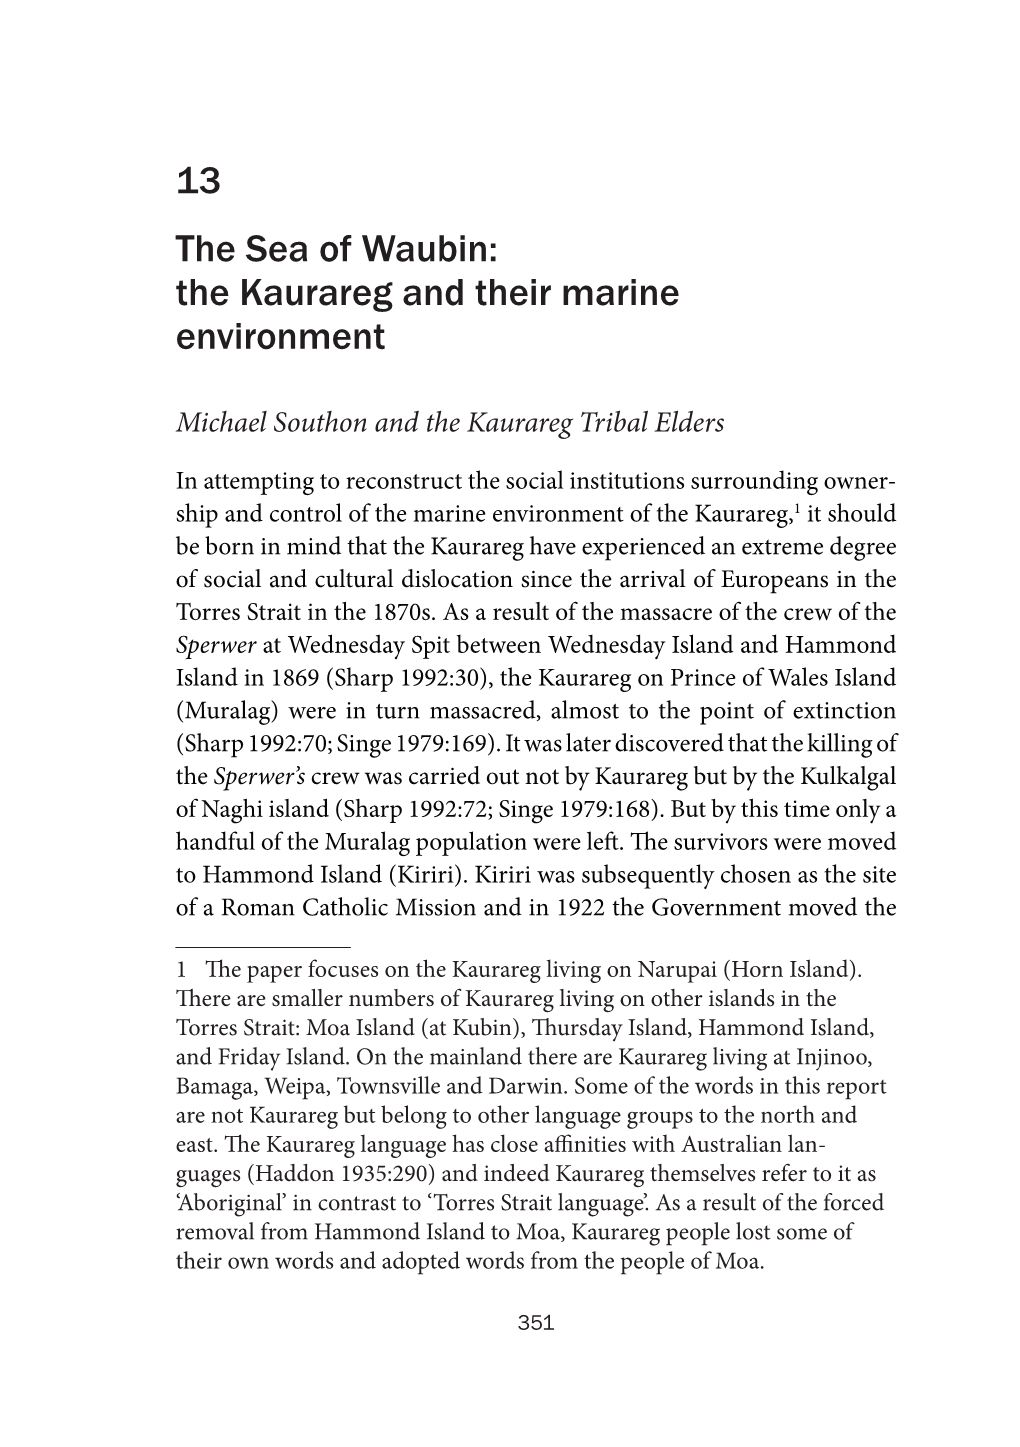 13 the Sea of Waubin: the Kaurareg and Their Marine Environment